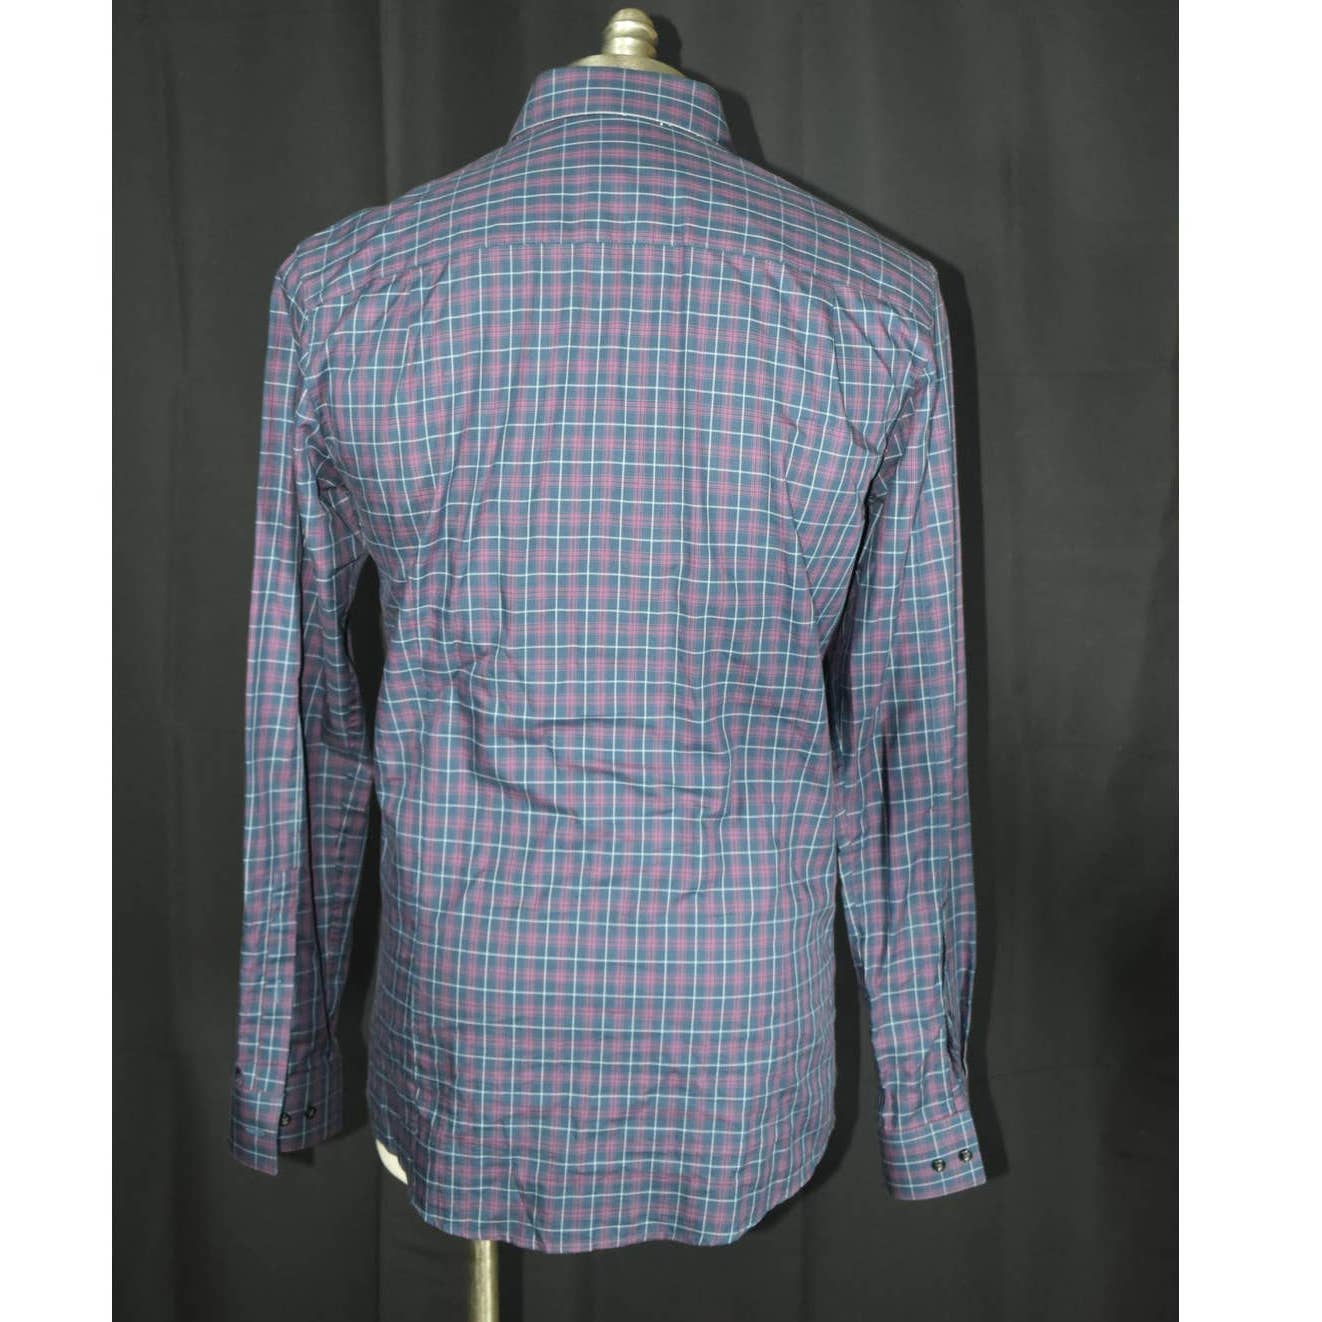 HUGO Hugo Boss Purple Blue Plaid Slim Fit Button Up Shirt - 15.5 34/35